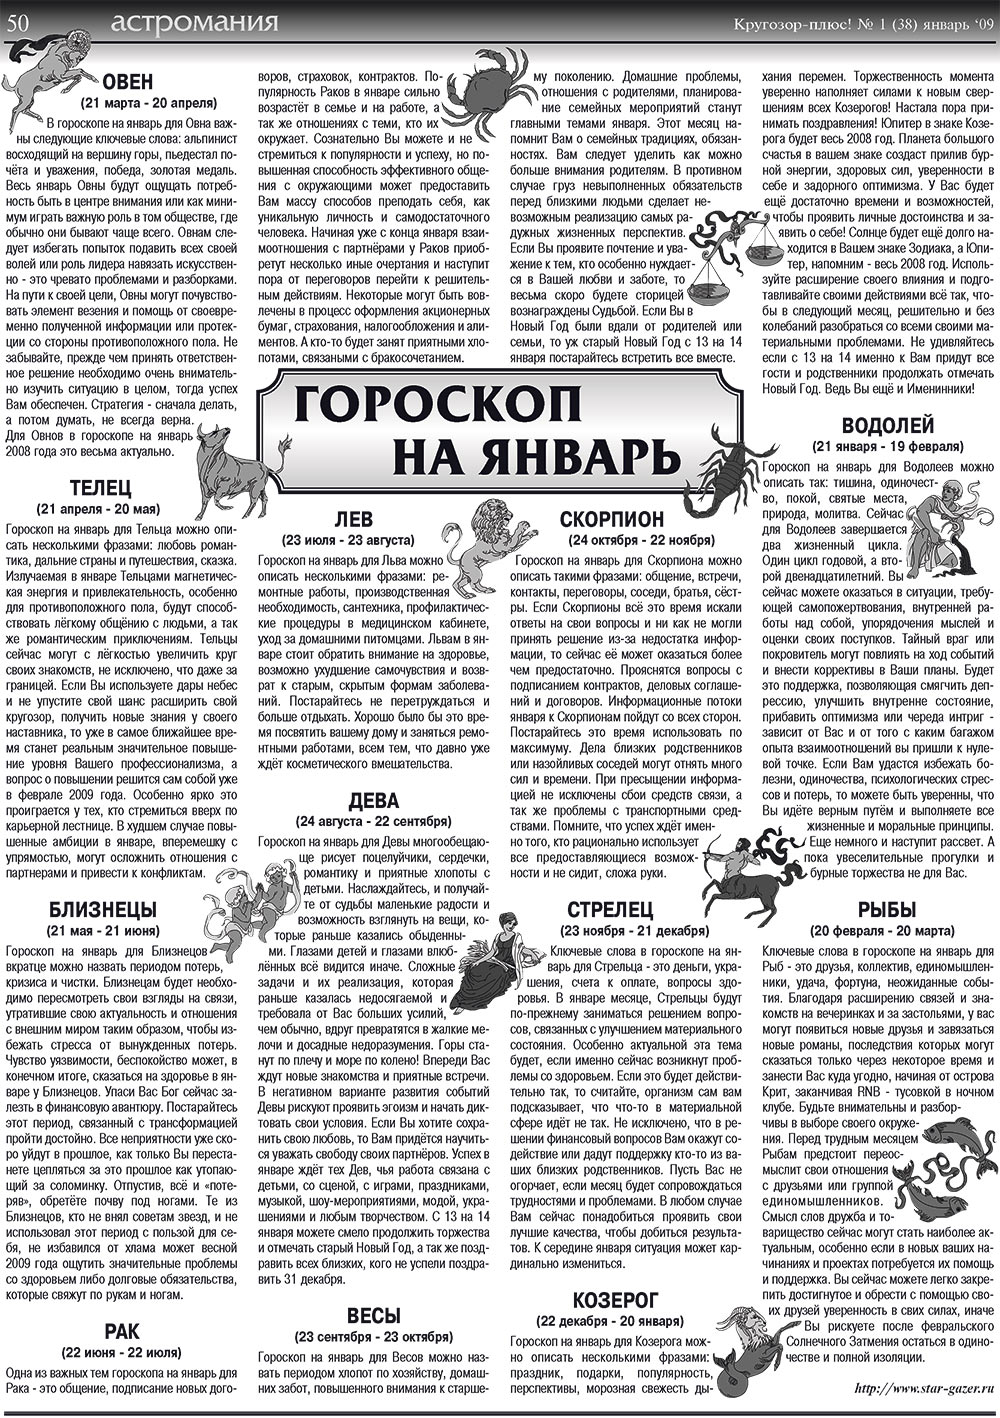 Кругозор плюс! (газета). 2009 год, номер 1, стр. 50